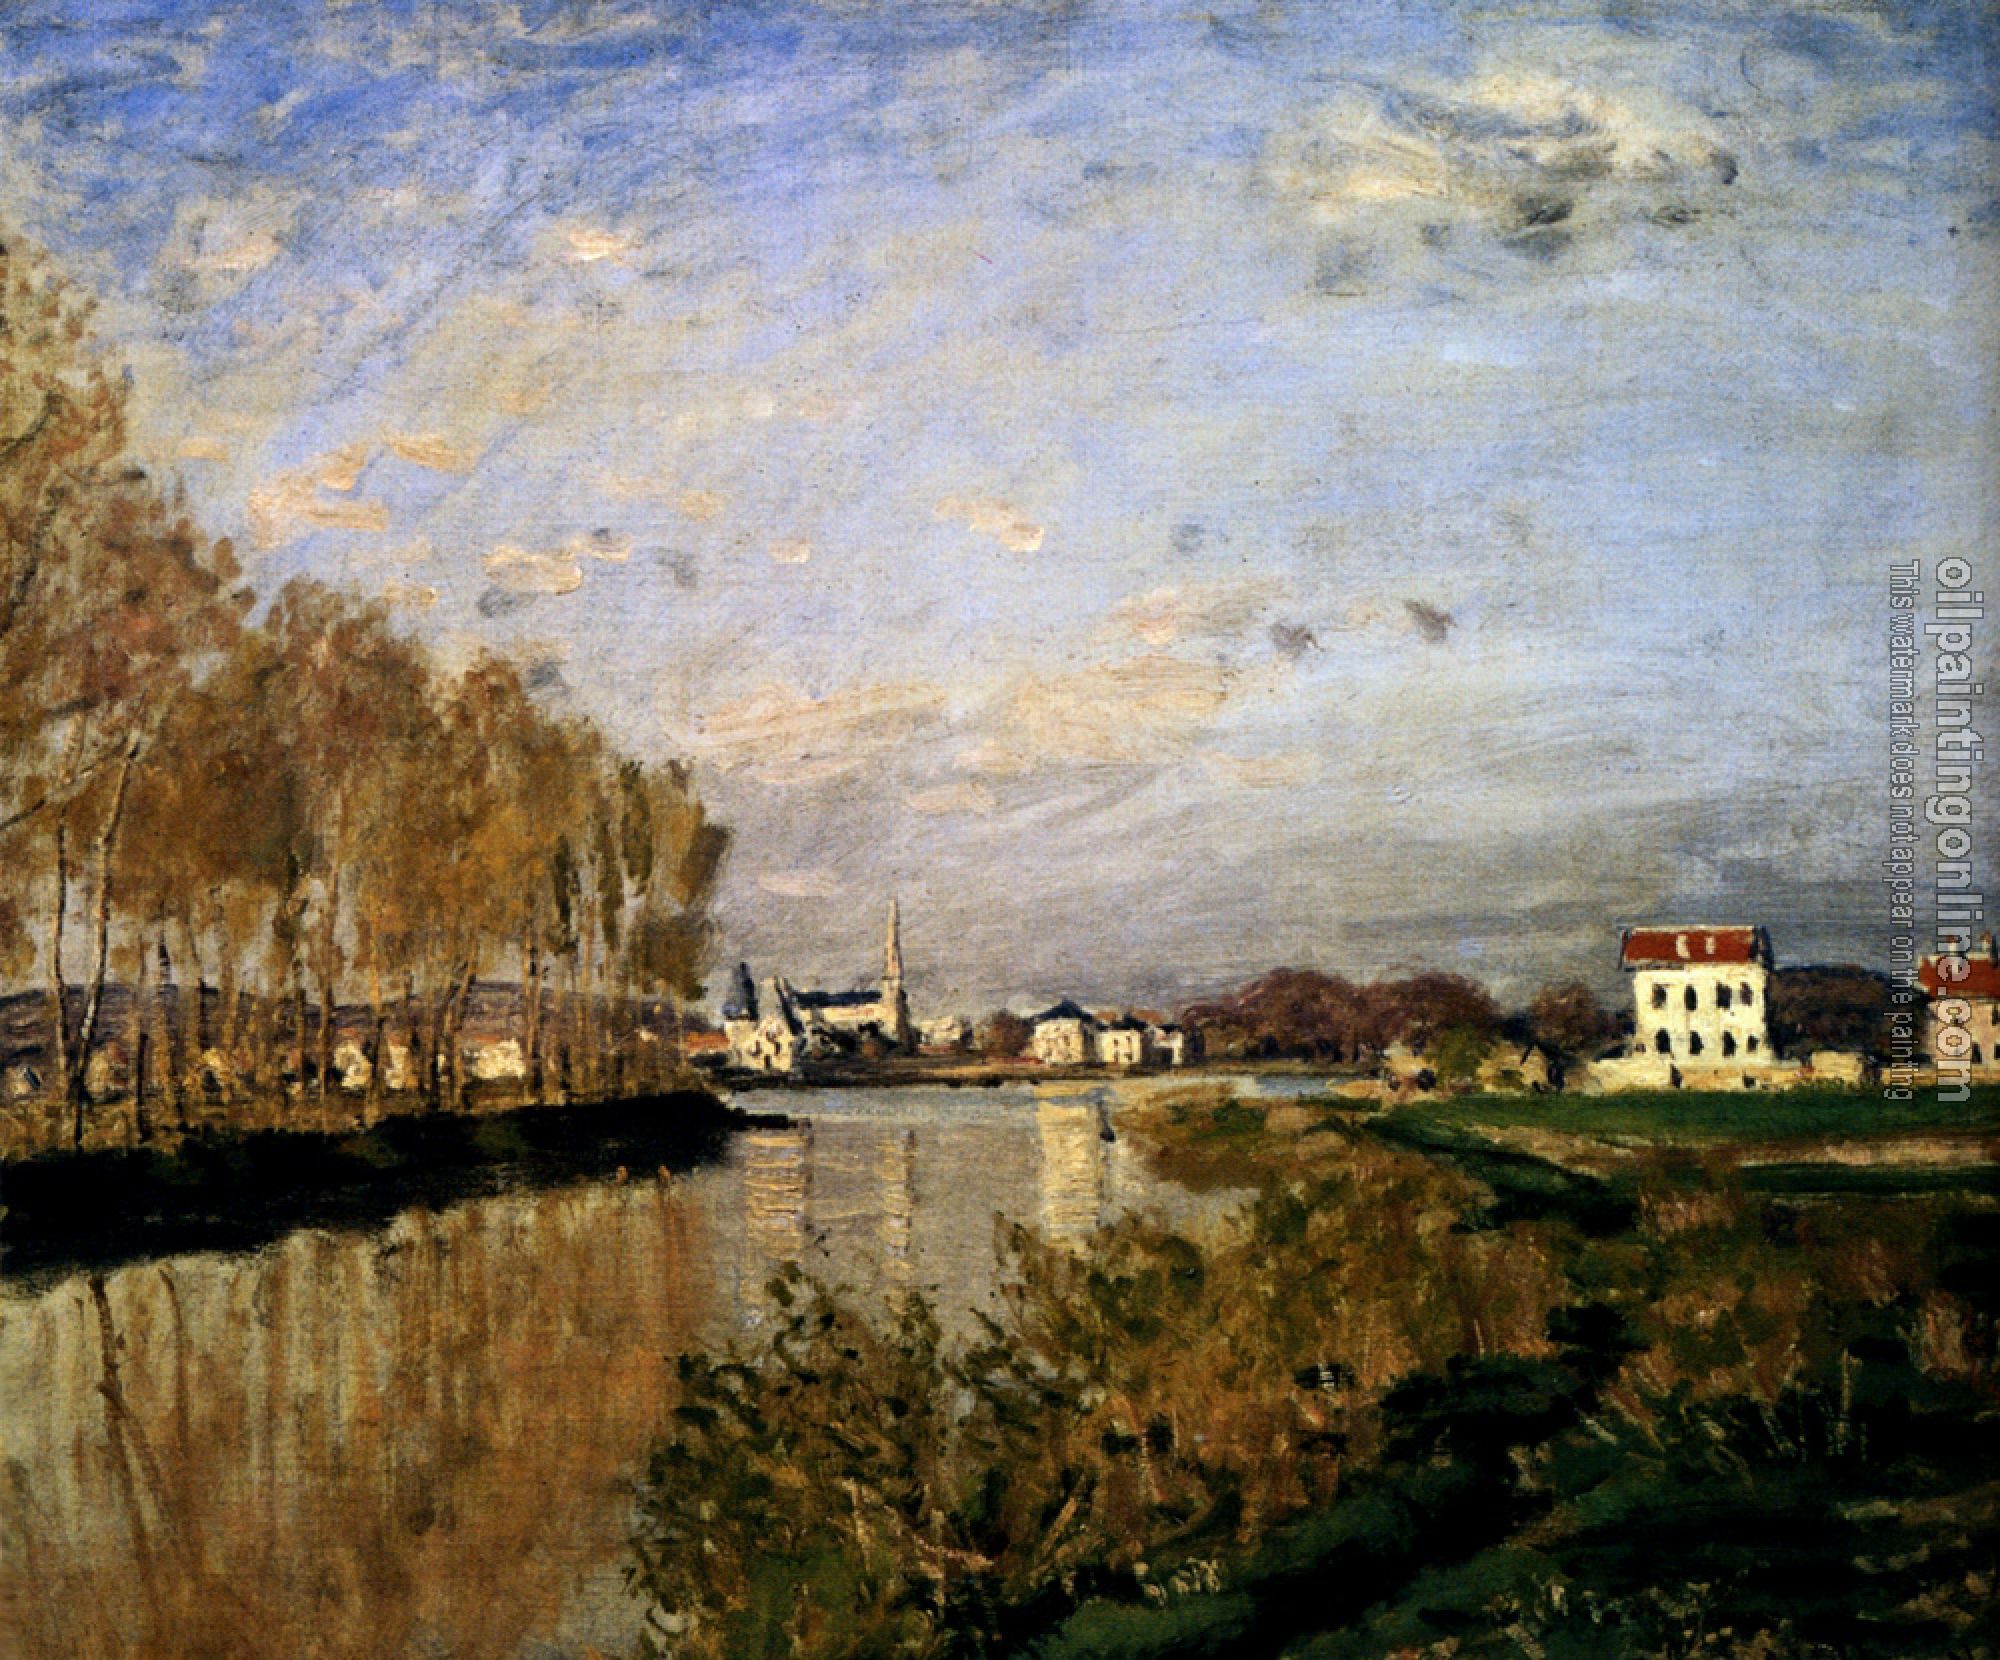 Monet, Claude Oscar - The Seine At Argenteuil, 1873